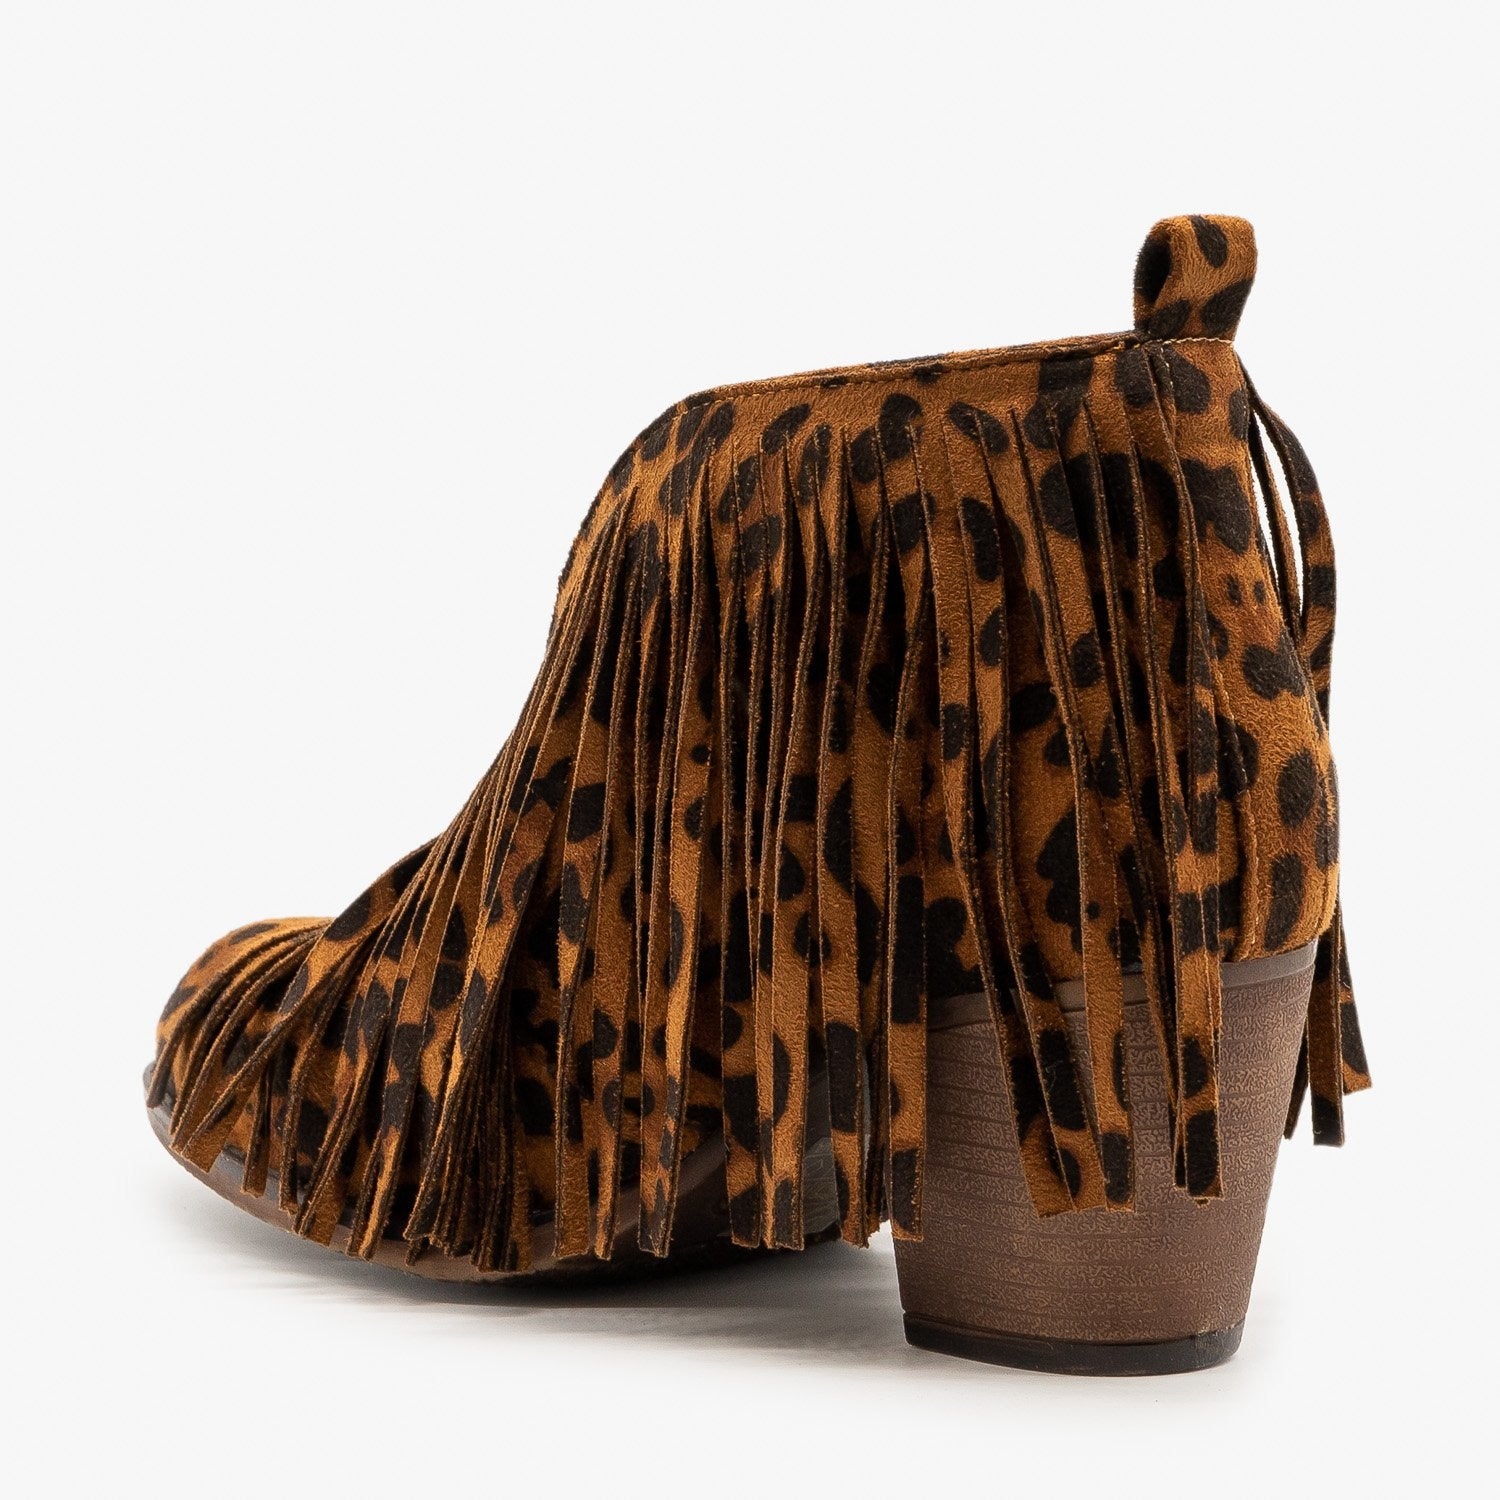 leopard print fringe boots